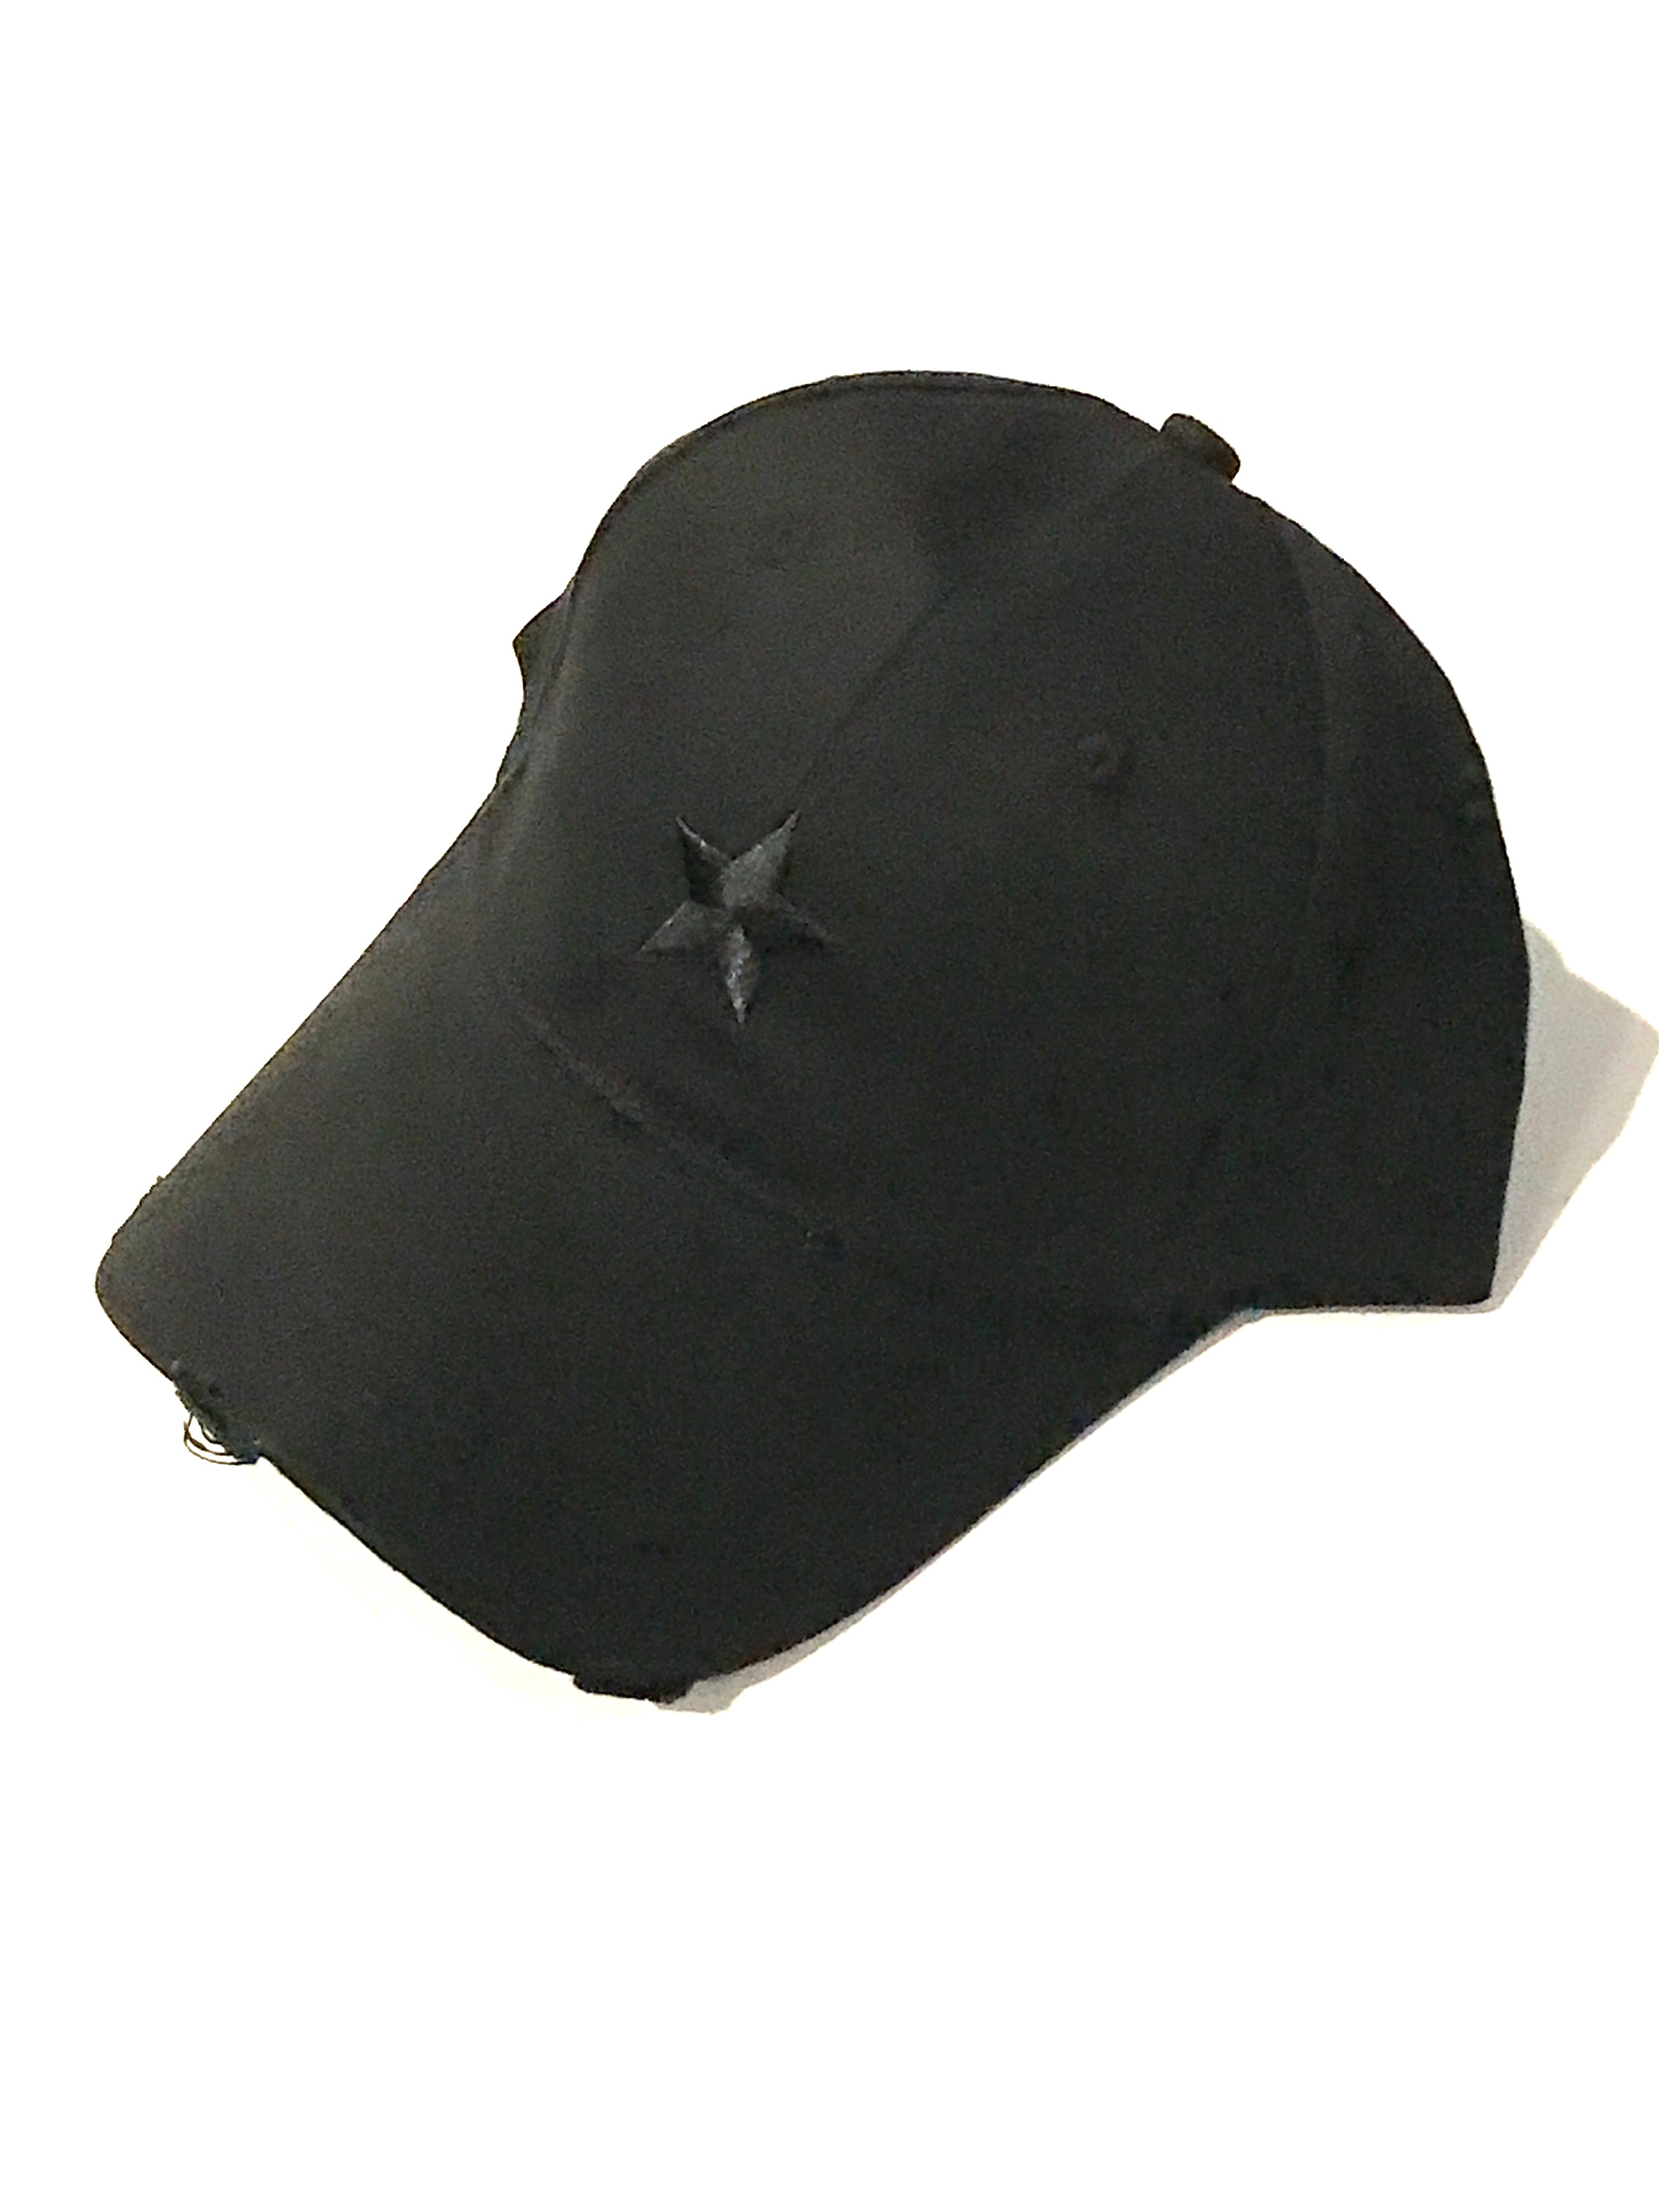 boardwalk baseball cap black/black star